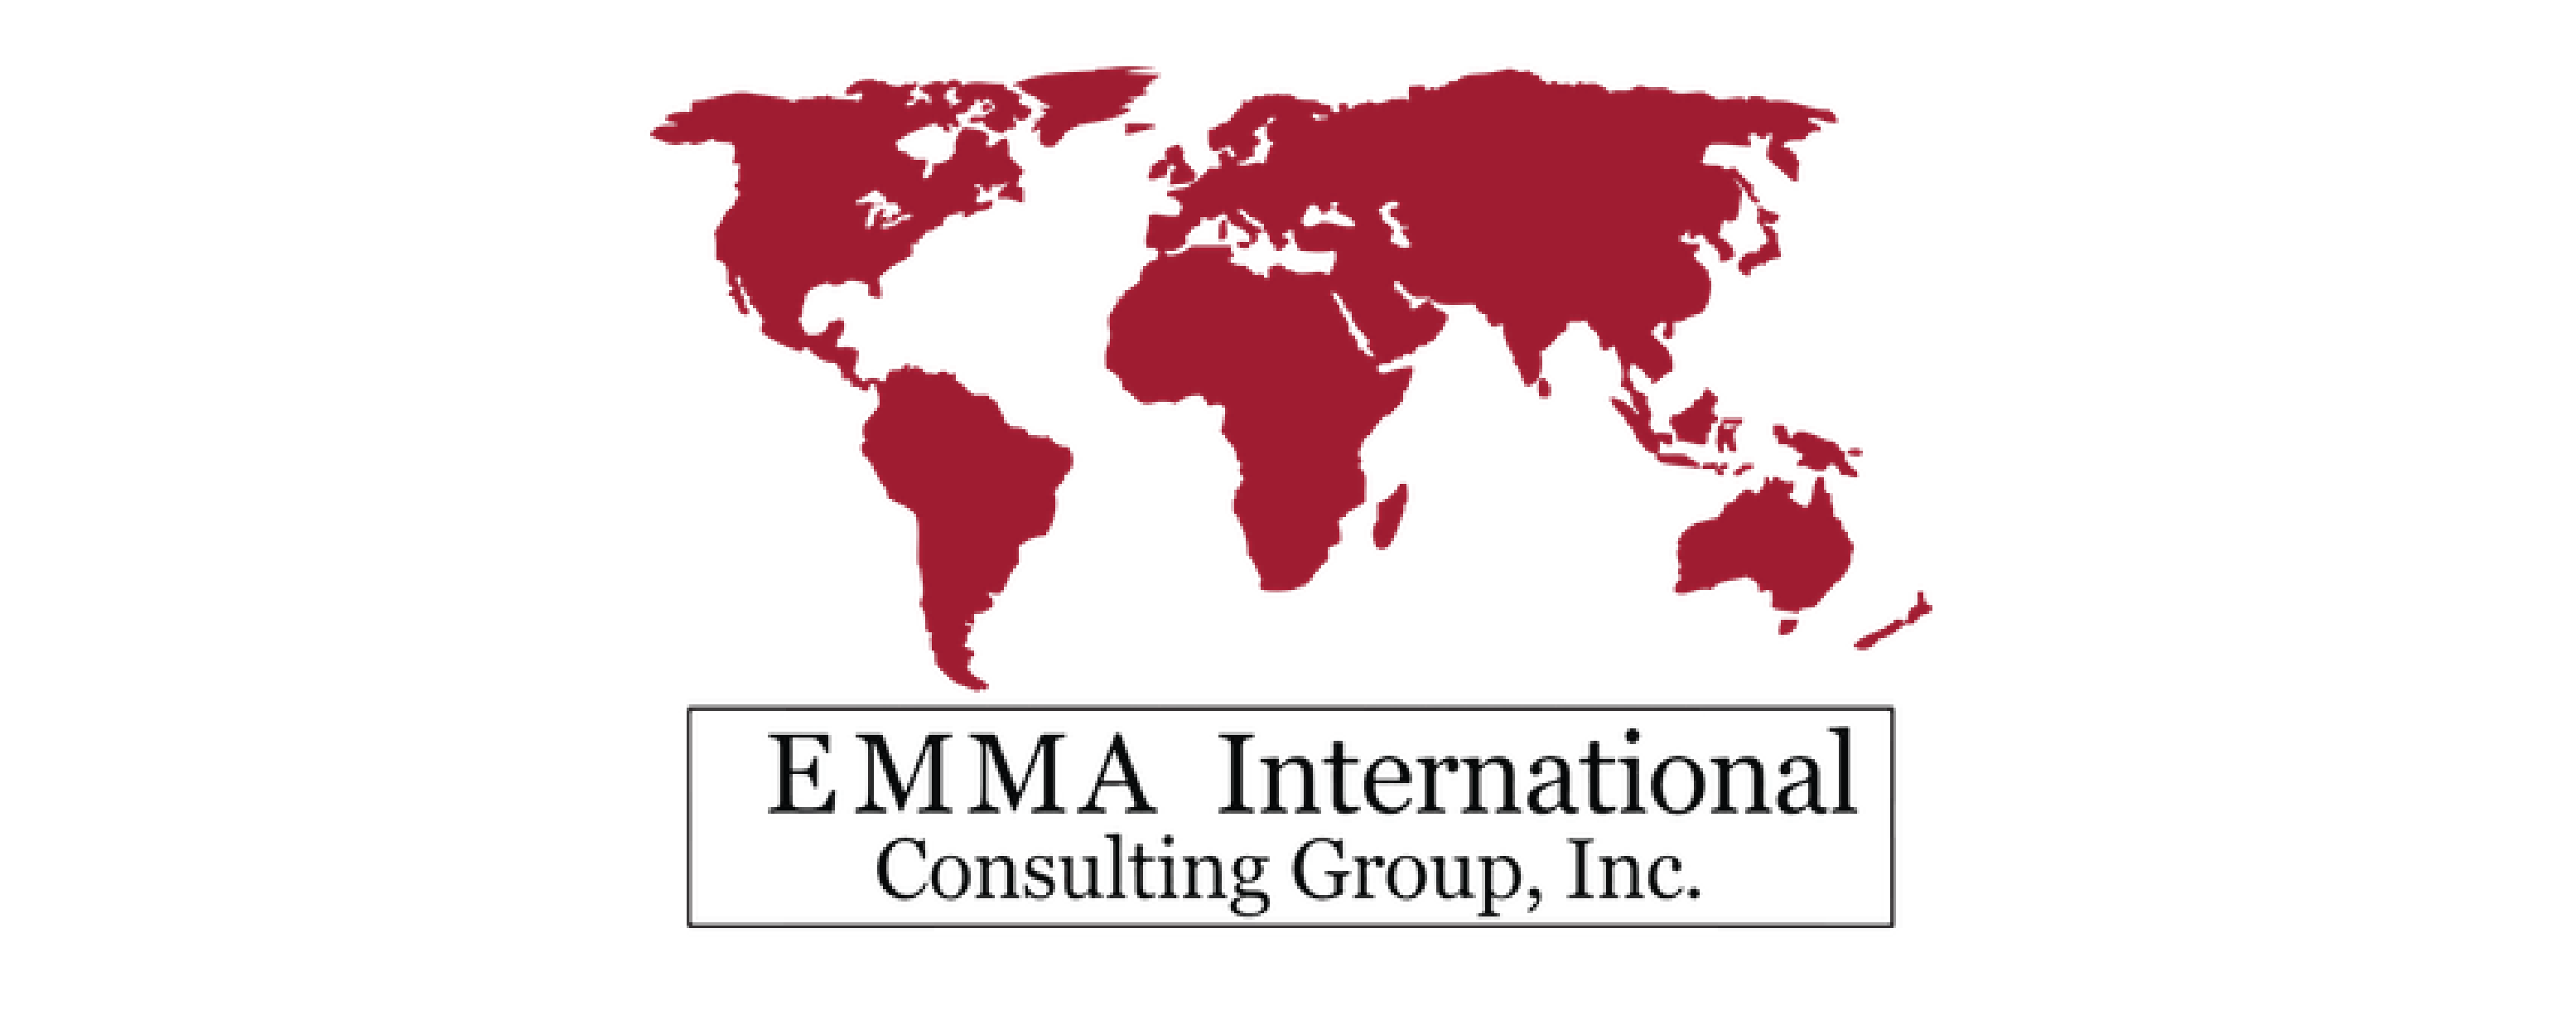 EMMA International